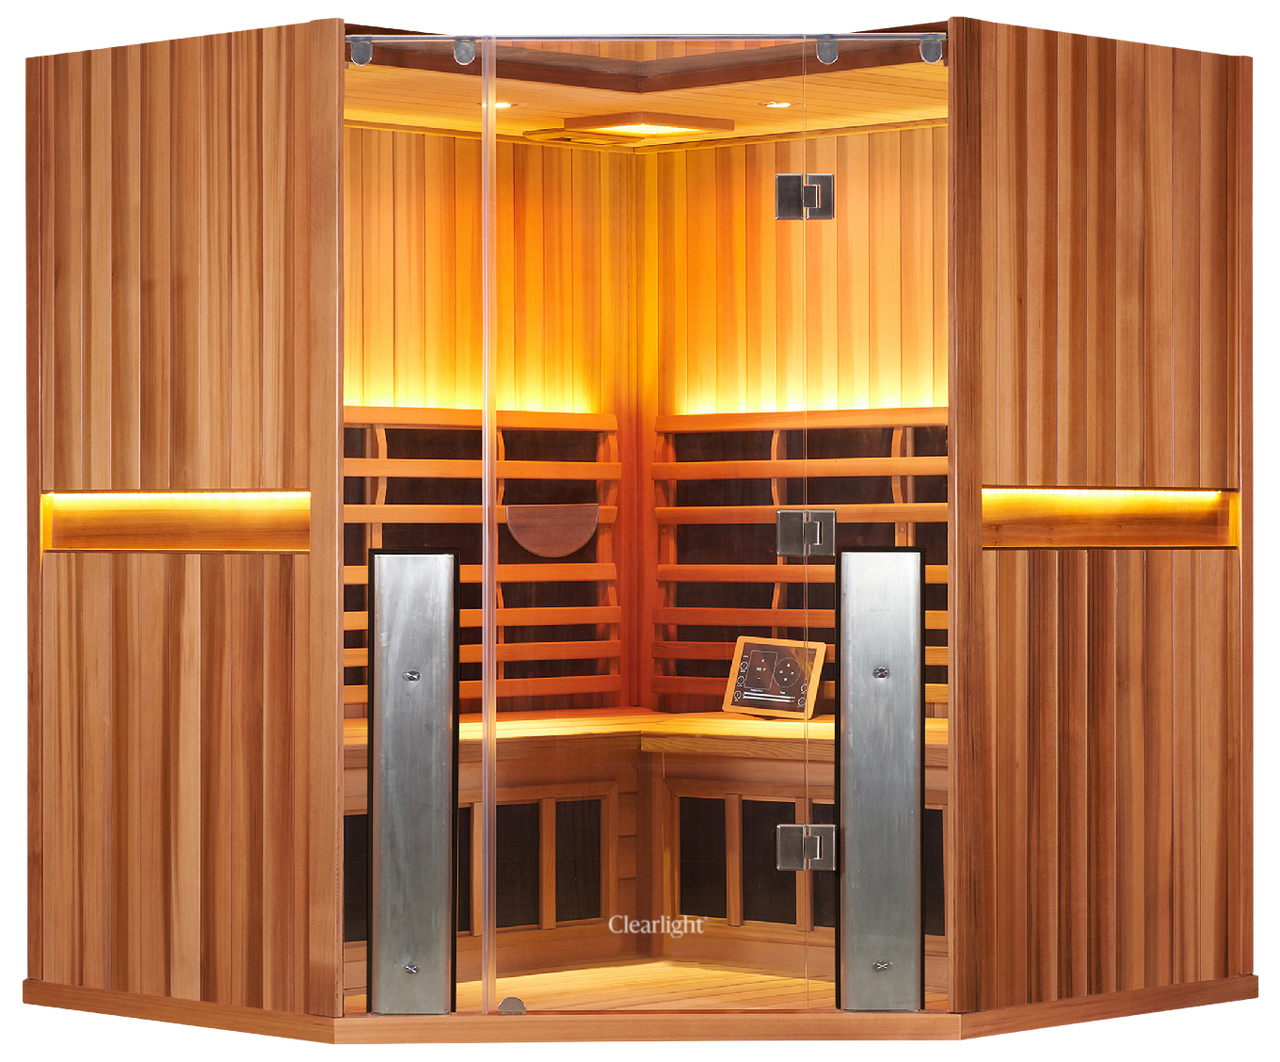 Infrared Saunas - Full Spectrum Infrared Sauna Guide - SaunaCloud